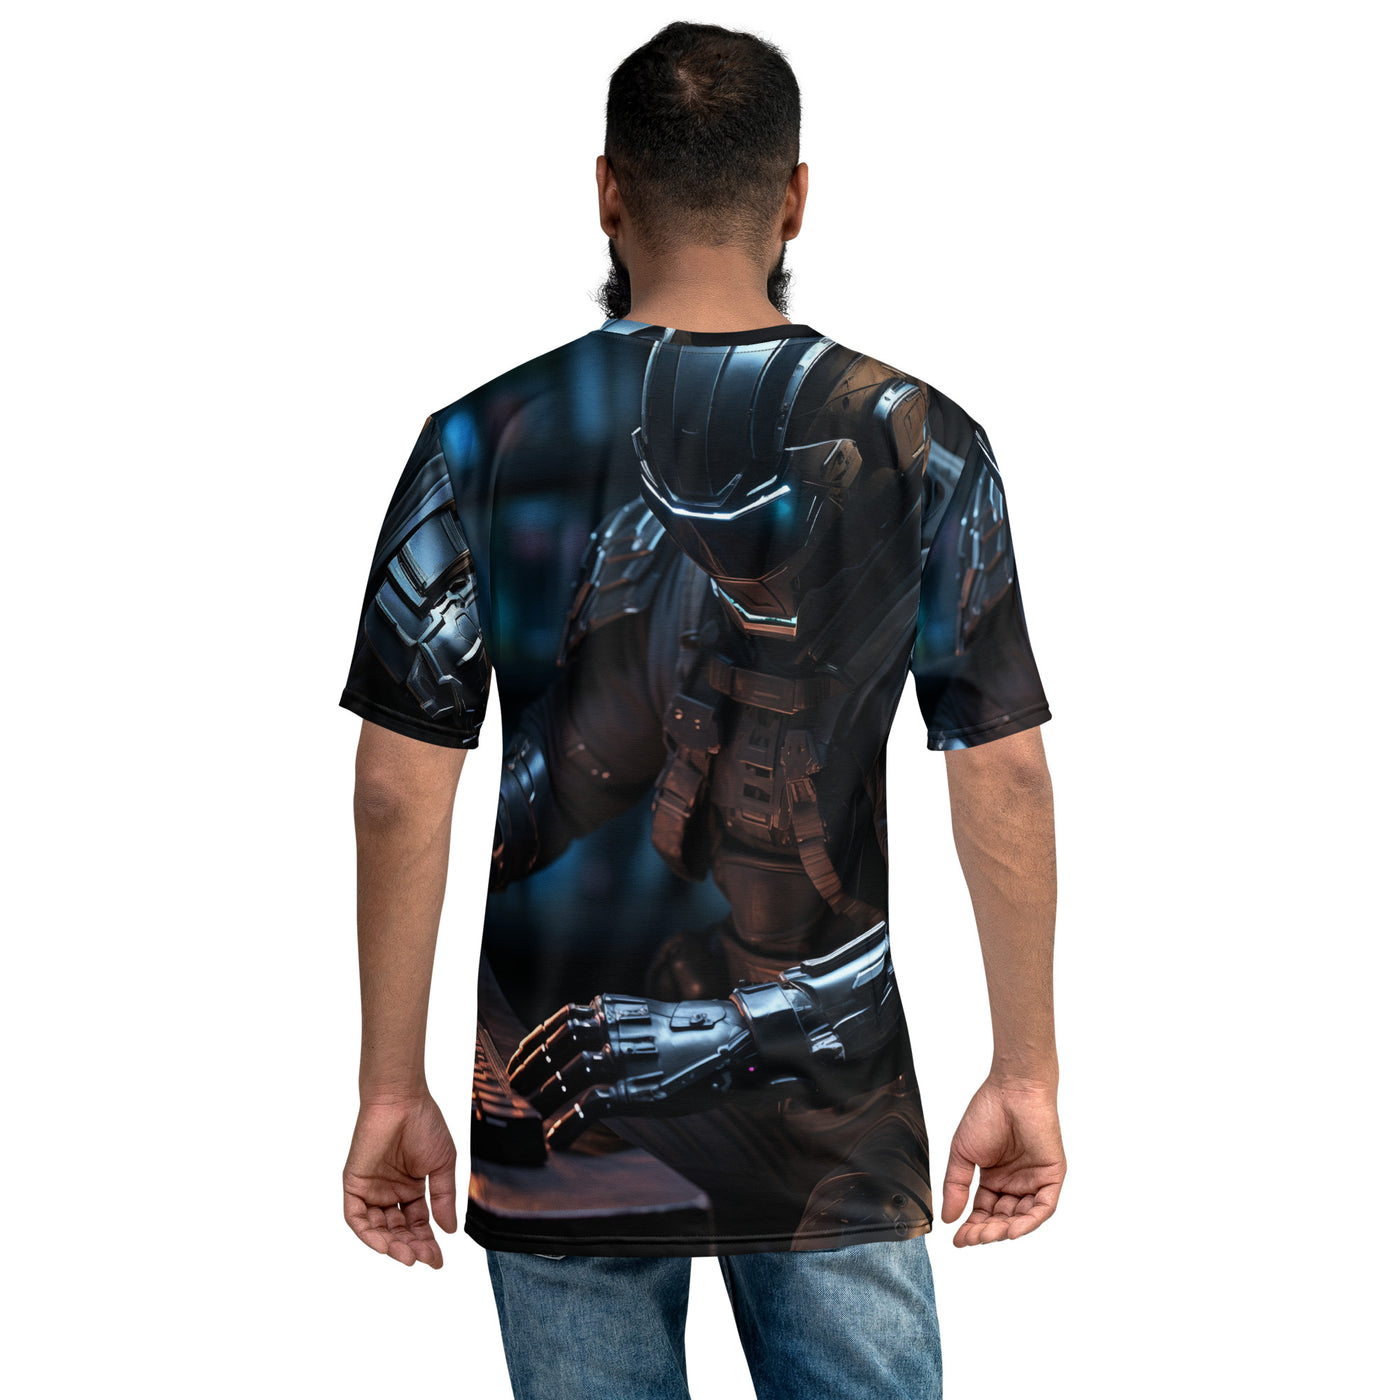 CyberArms Warrior v18 - Men's t-shirt